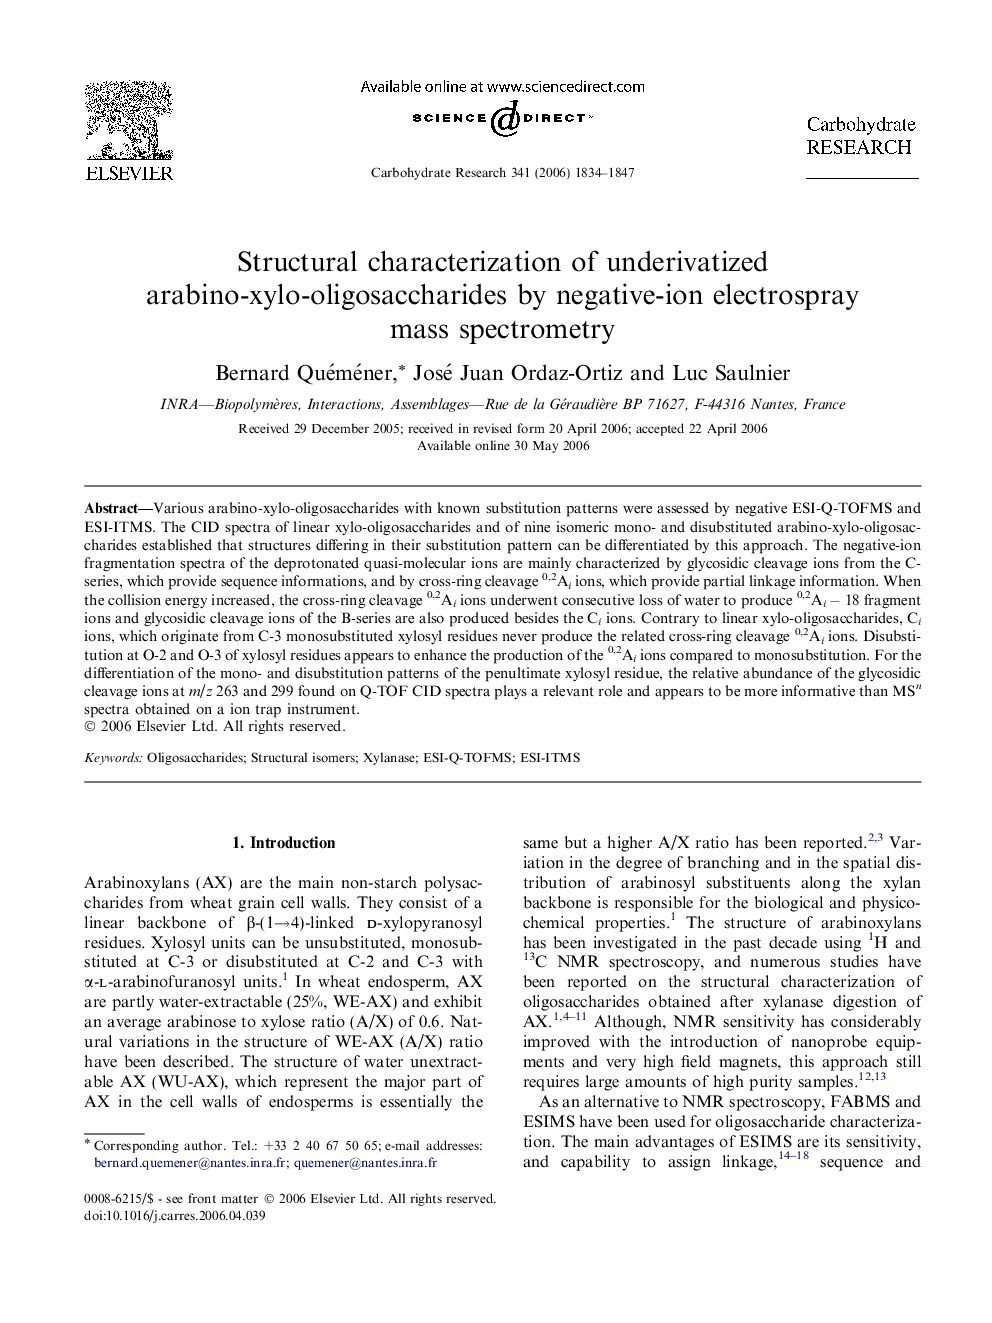 Structural characterization of underivatized arabino-xylo-oligosaccharides by negative-ion electrospray mass spectrometry